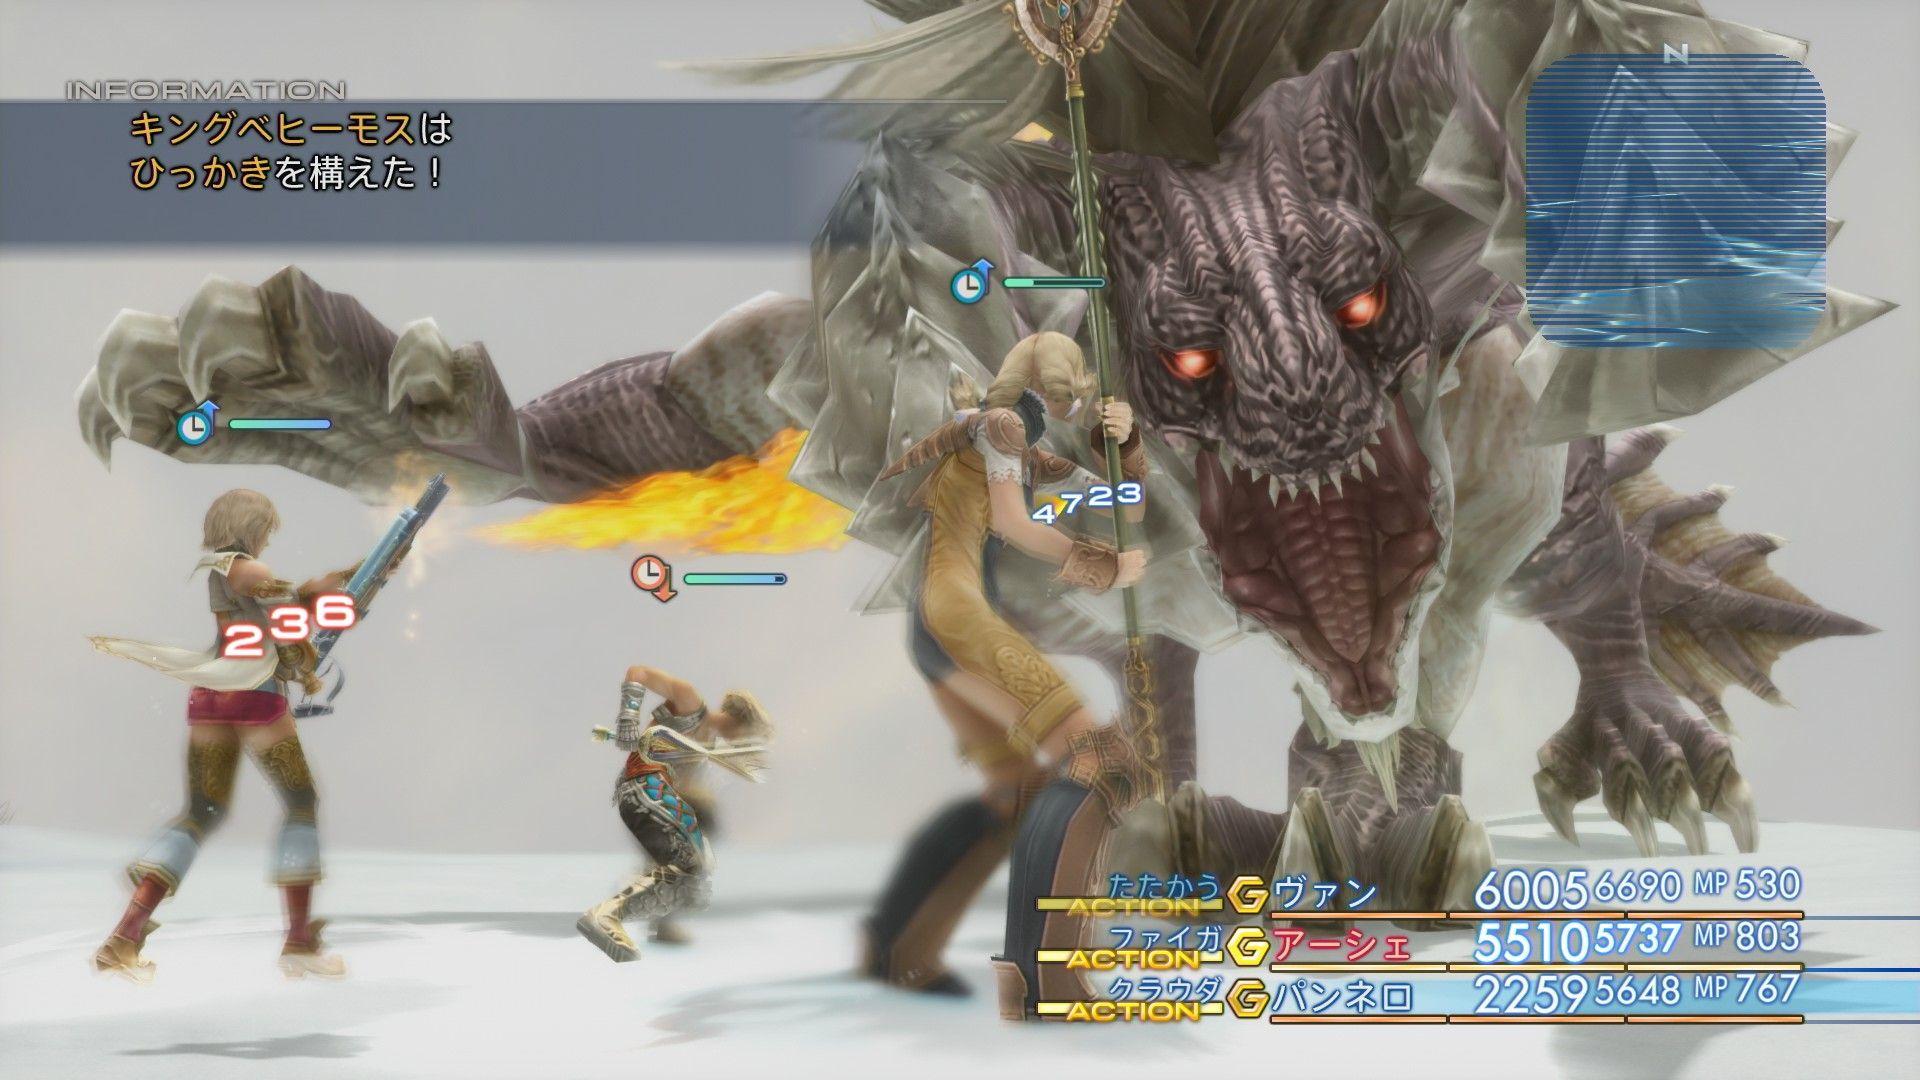 Final Fantasy XII The Zodiac Age screenshots show off Hunts